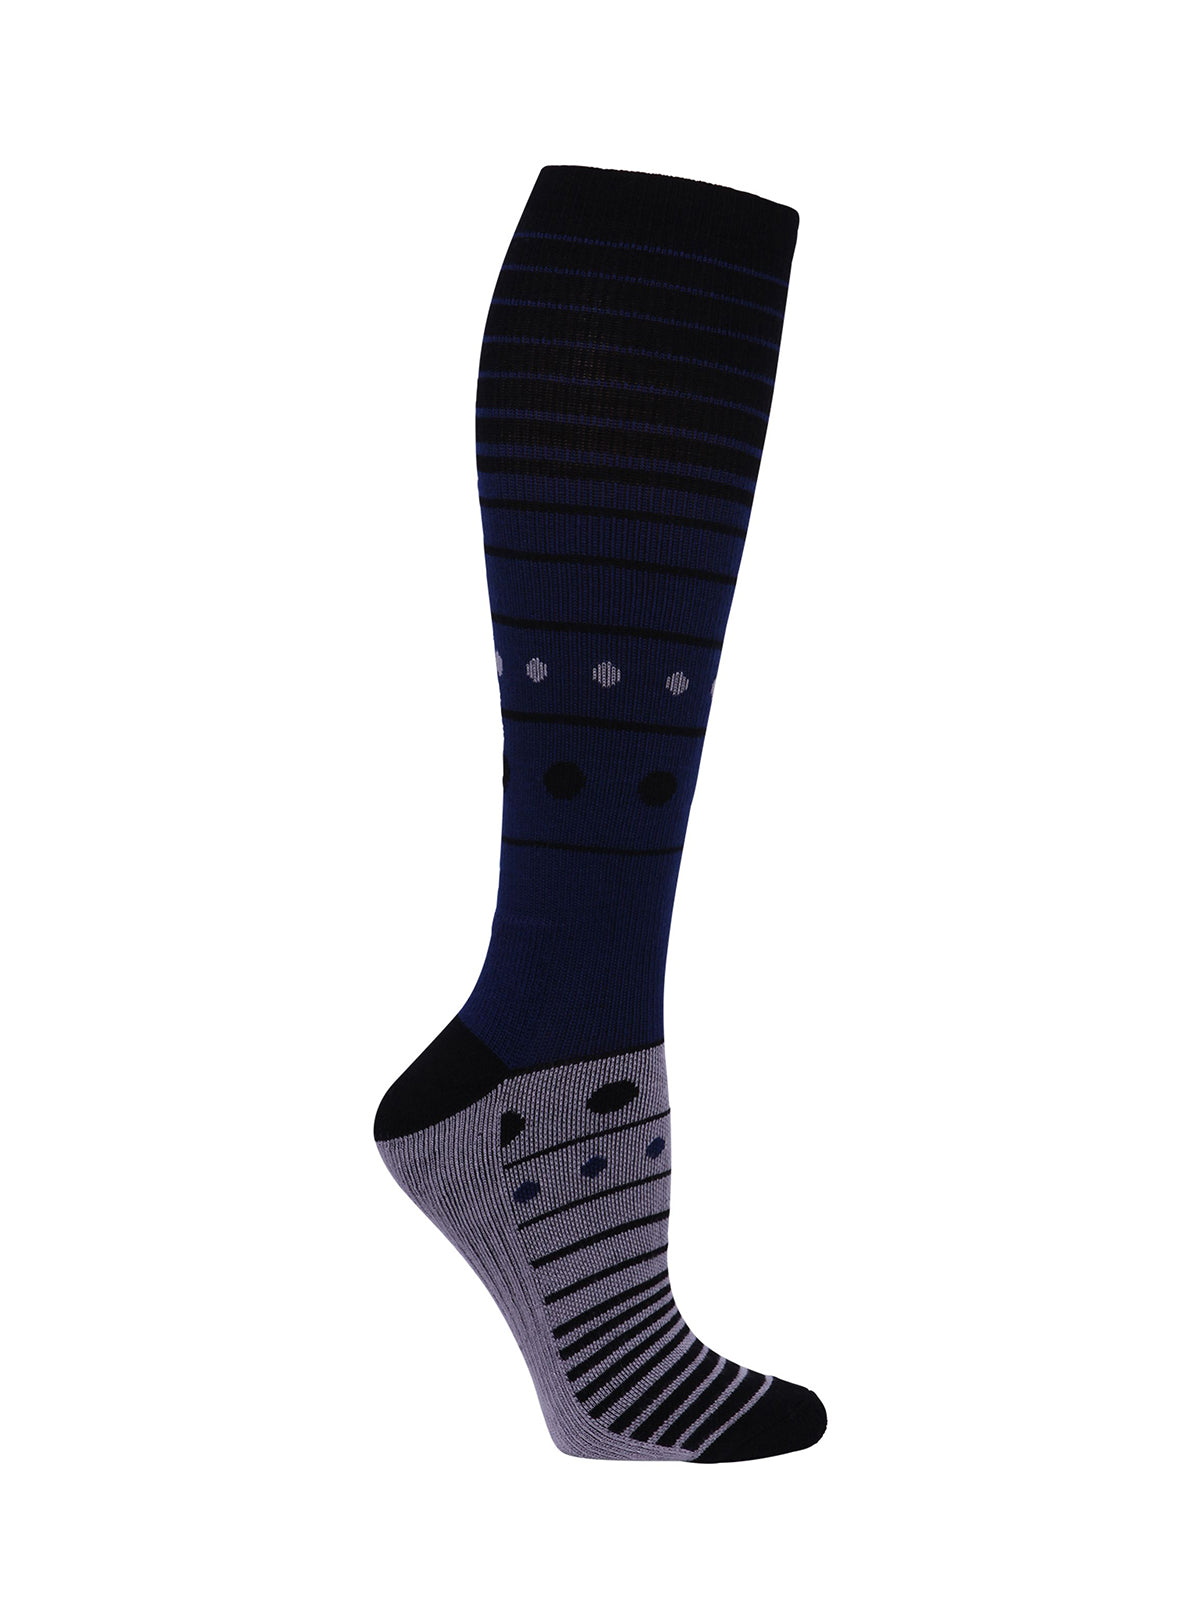 Knee High 15-20 mmHg Compression Socks - LXSUPPORT - Gentle